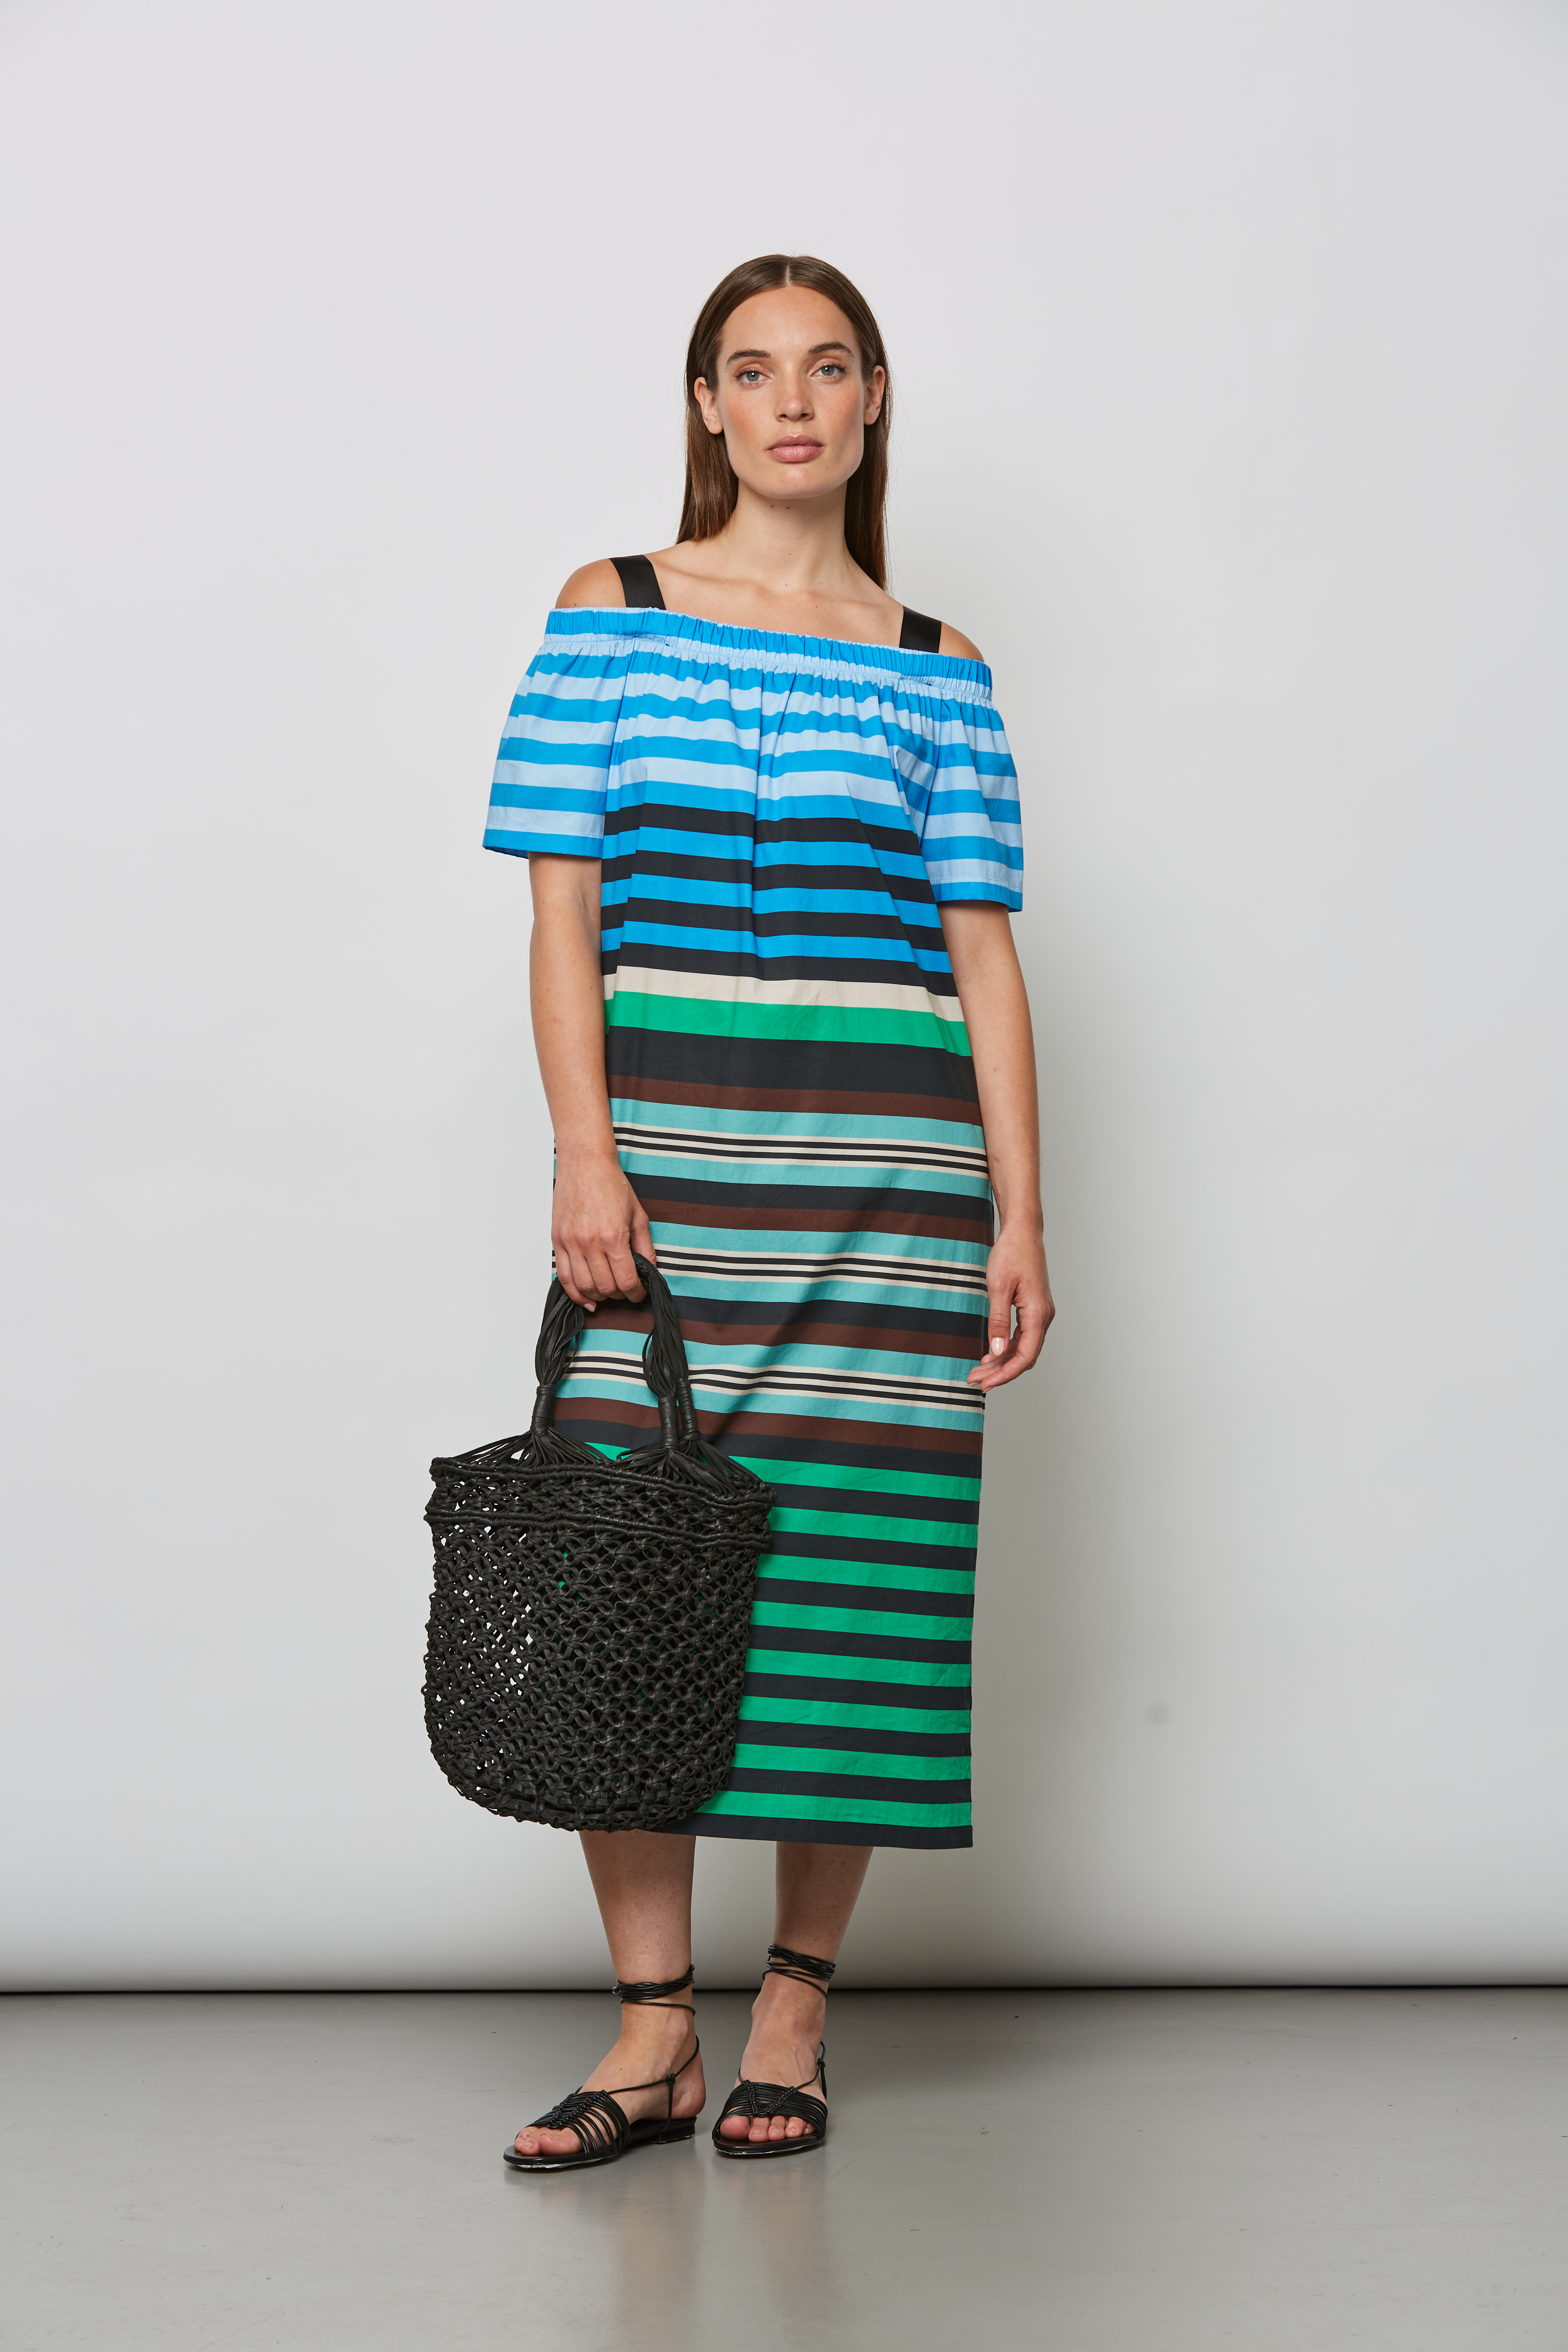 Stripe dress multi